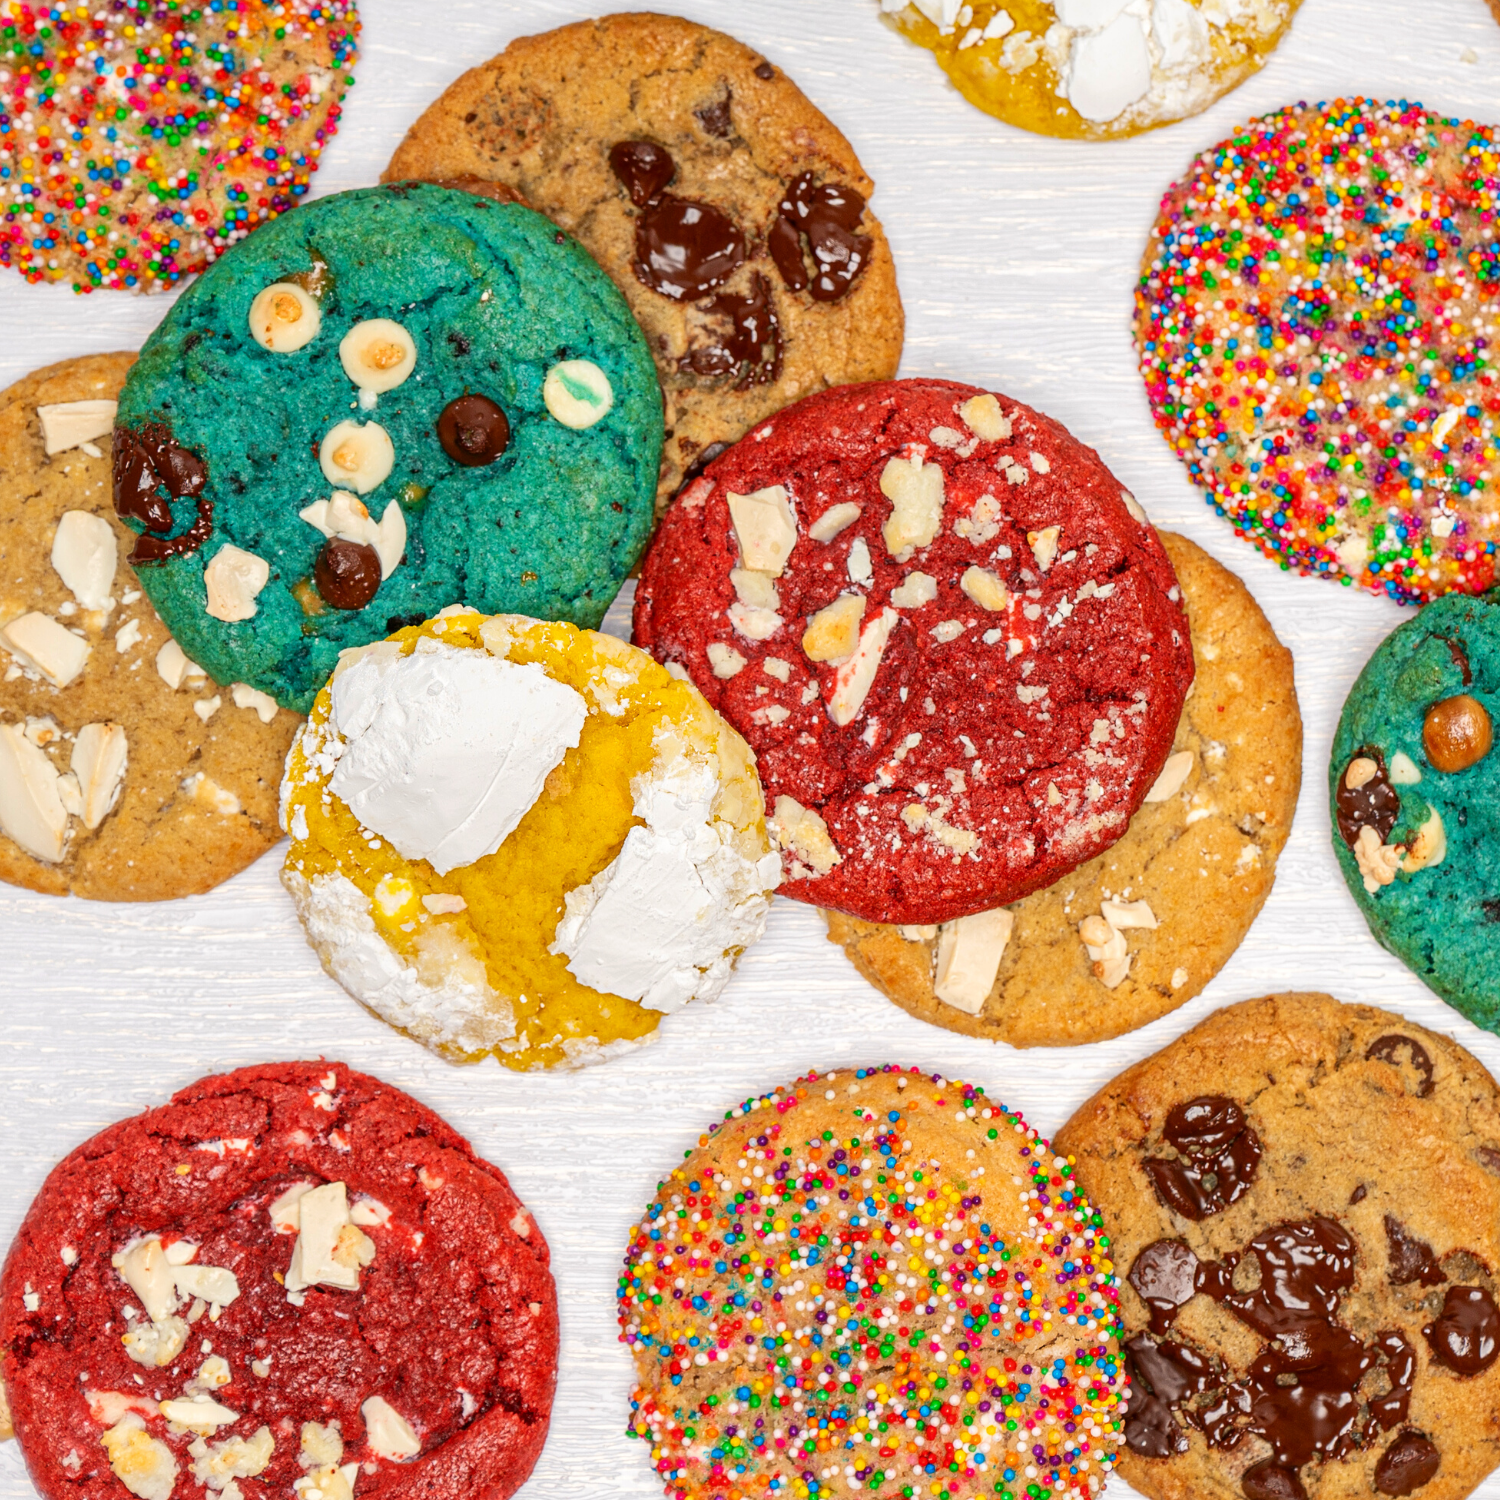 The Cravory Best Seller cookies pack - Red Velvet cookie, chocolate chip cookie, Birthday cake cookie, Cookie Monster, Lemon Bar, Salted Caramel Cream